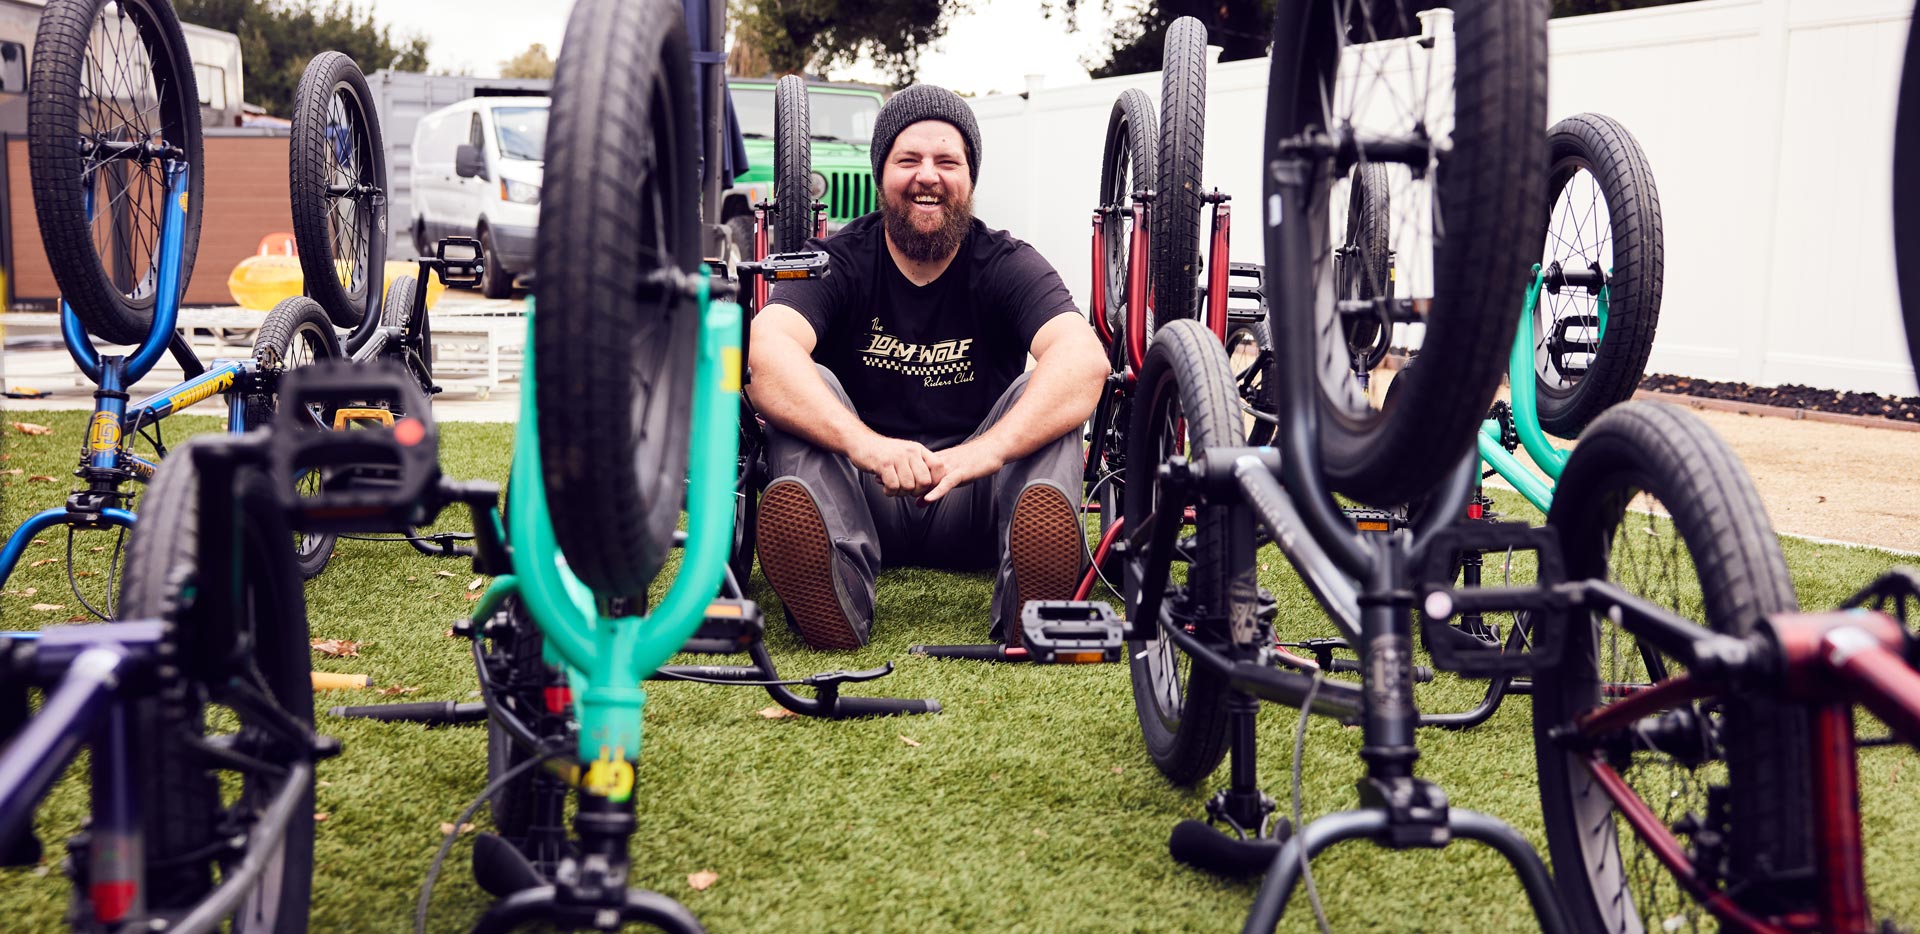 Spreading Good Times: Giving away BMX Bikes to Kids